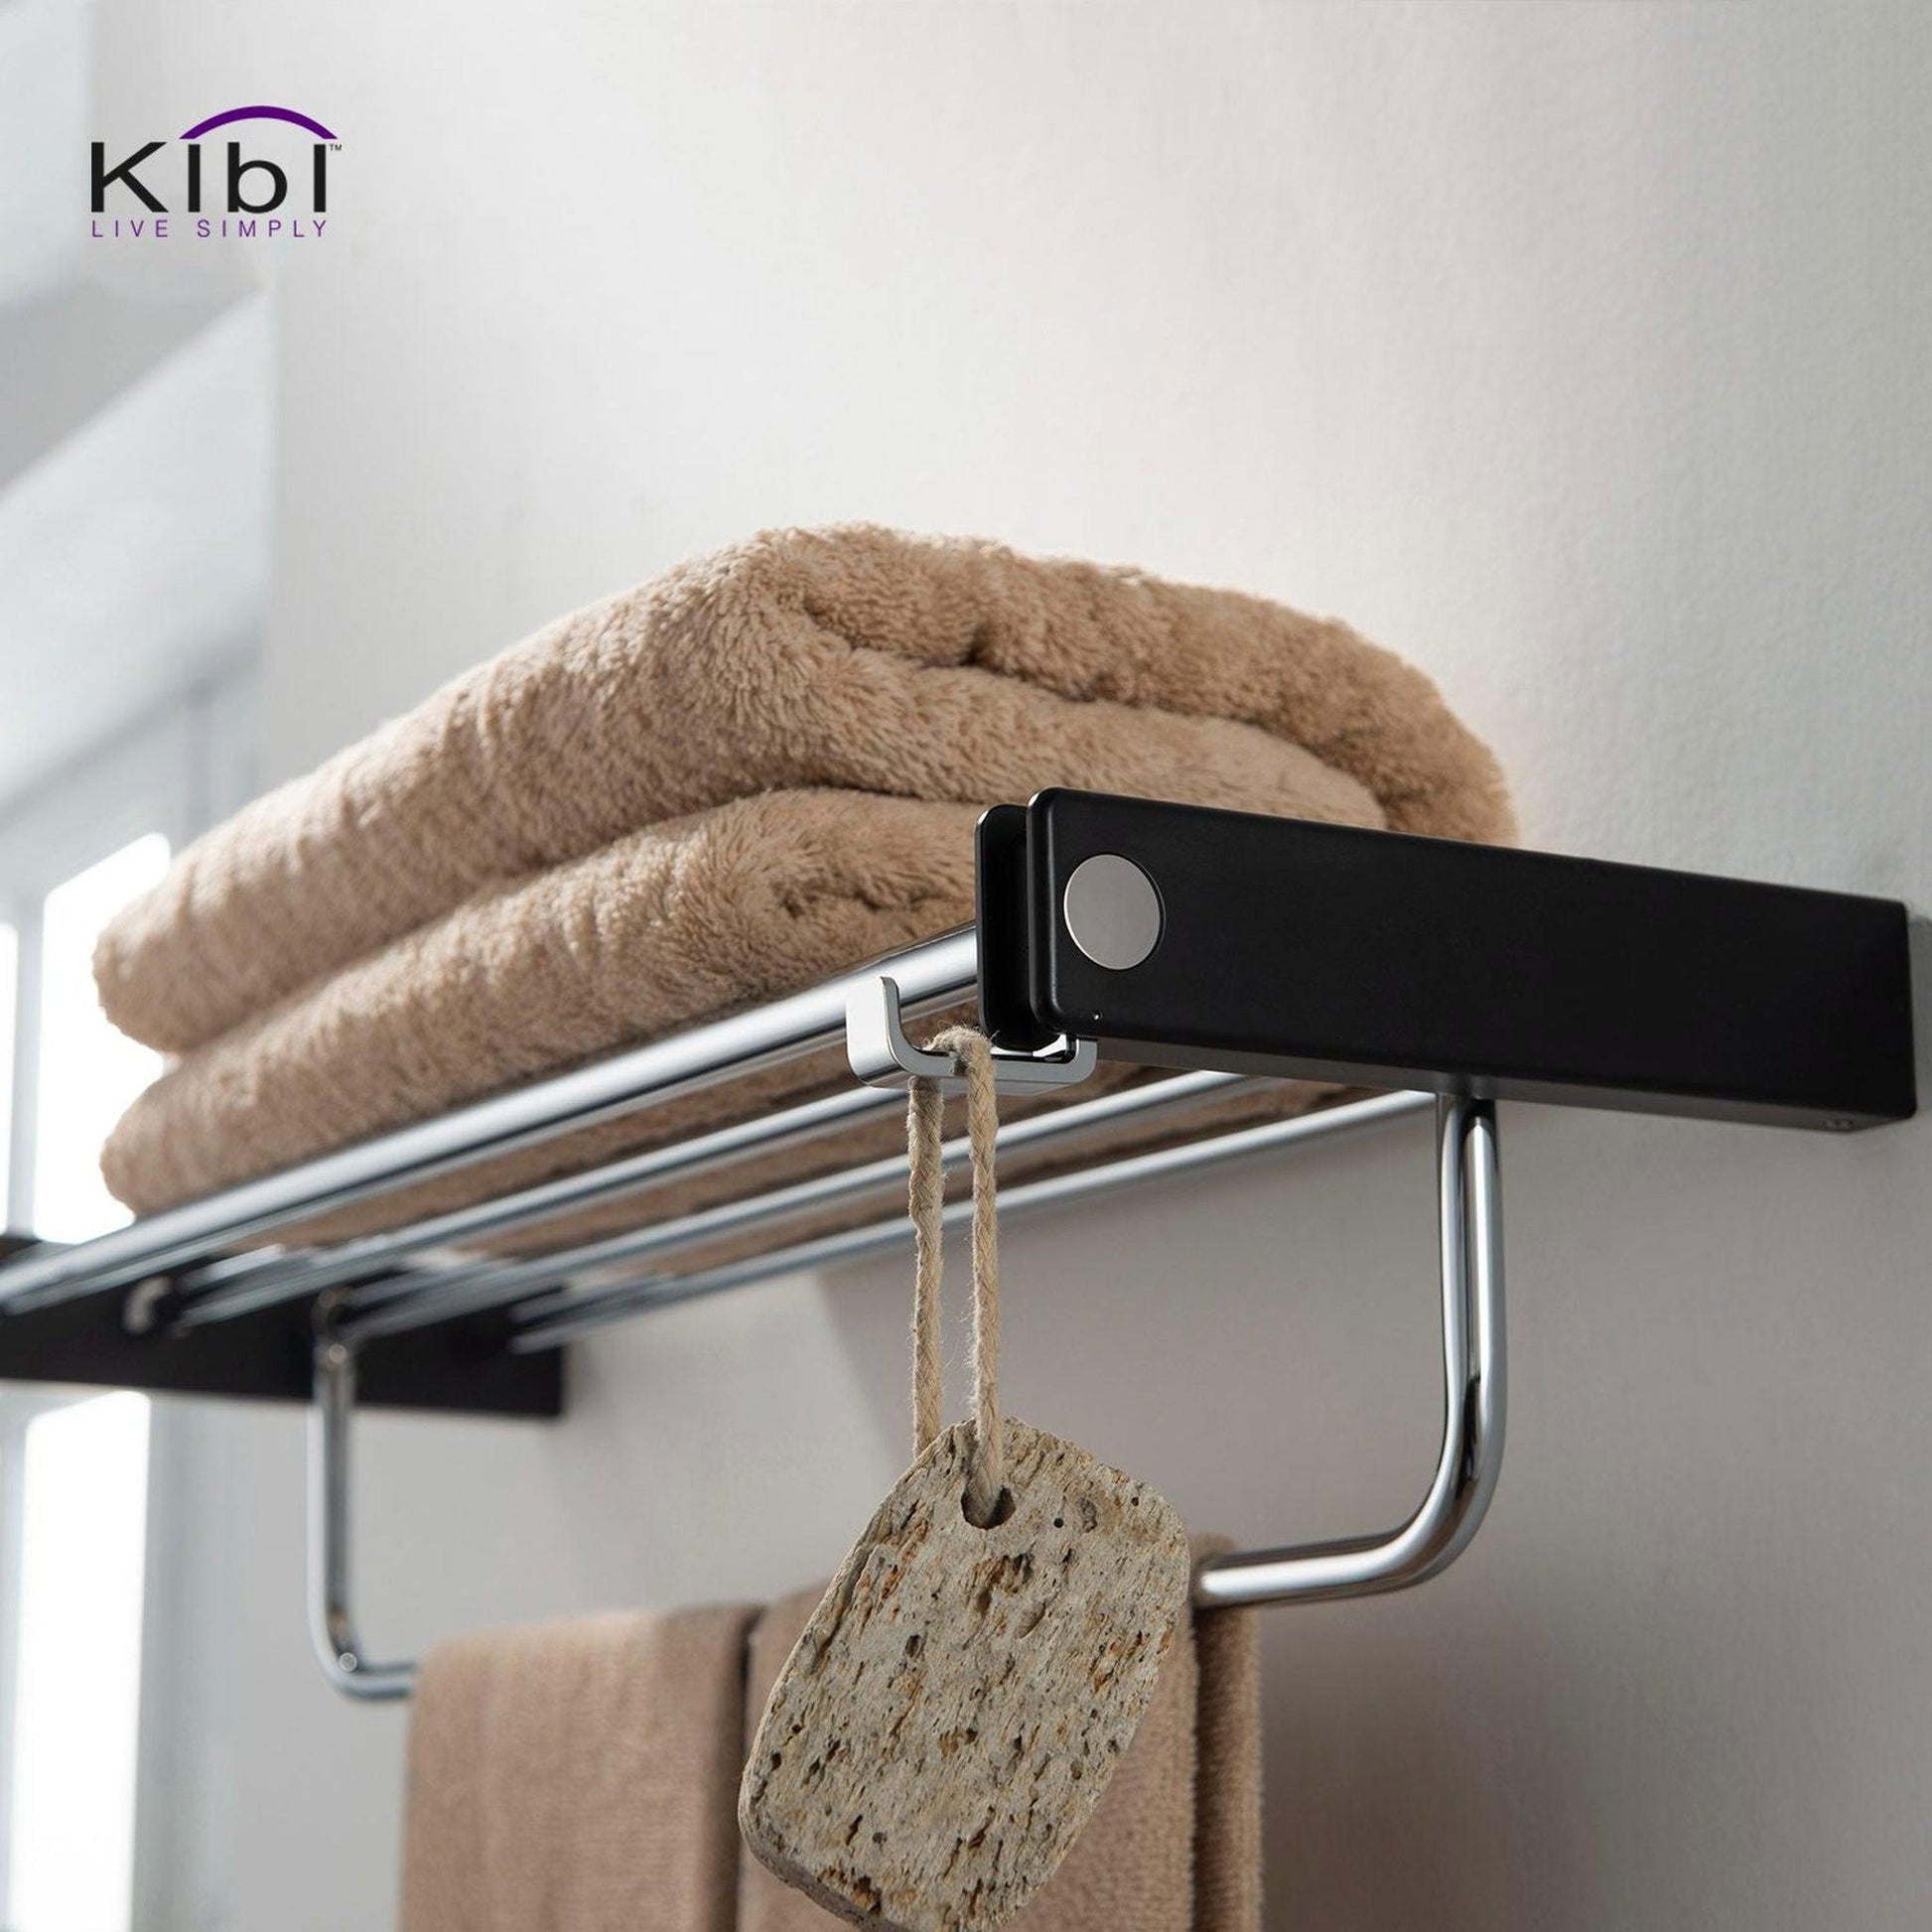 KIBI Artis Towel Rack With Hook in Chrome Black Finish